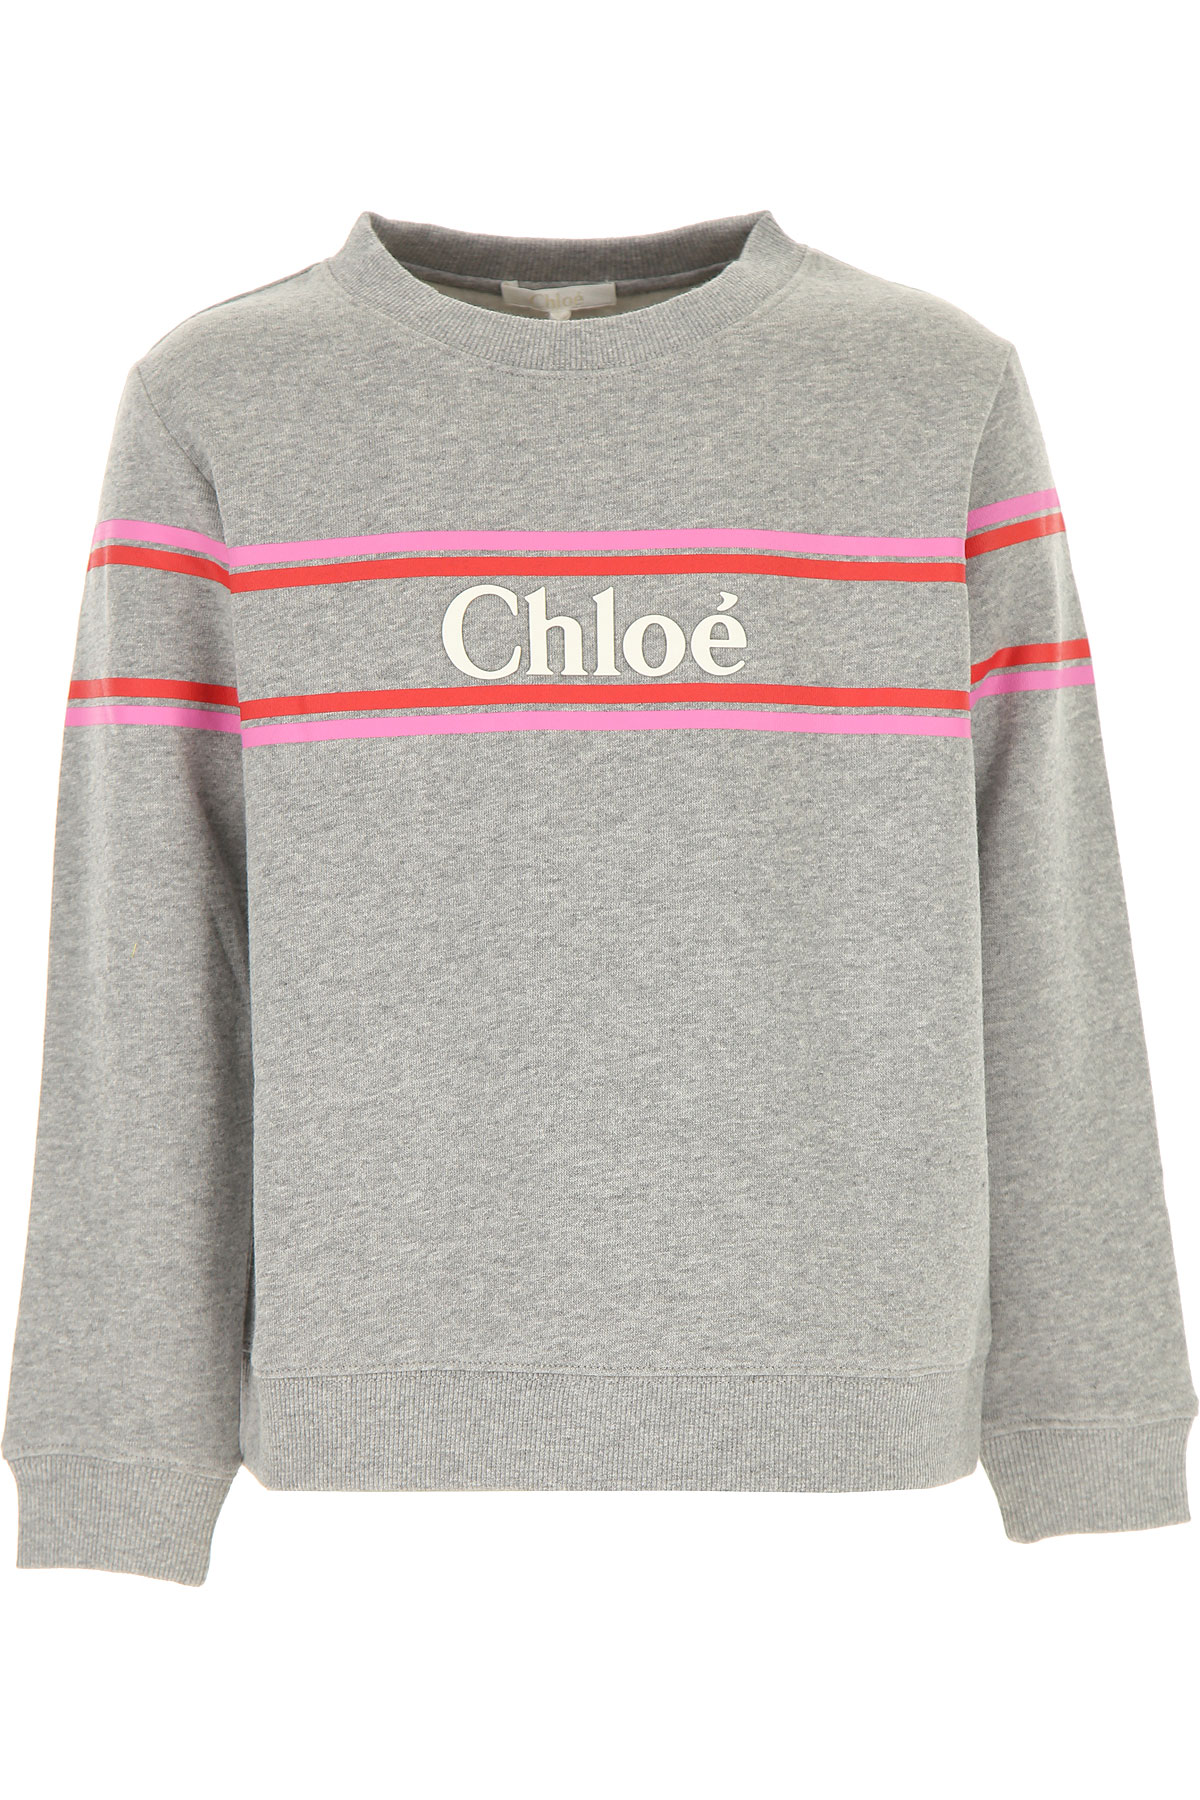 Chloe Kinder Sweatshirt & Kapuzenpullover für Mädchen Günstig im Sale, Grau, Baumwolle, 2017, 10Y 12Y 4Y 5Y 6Y 8Y